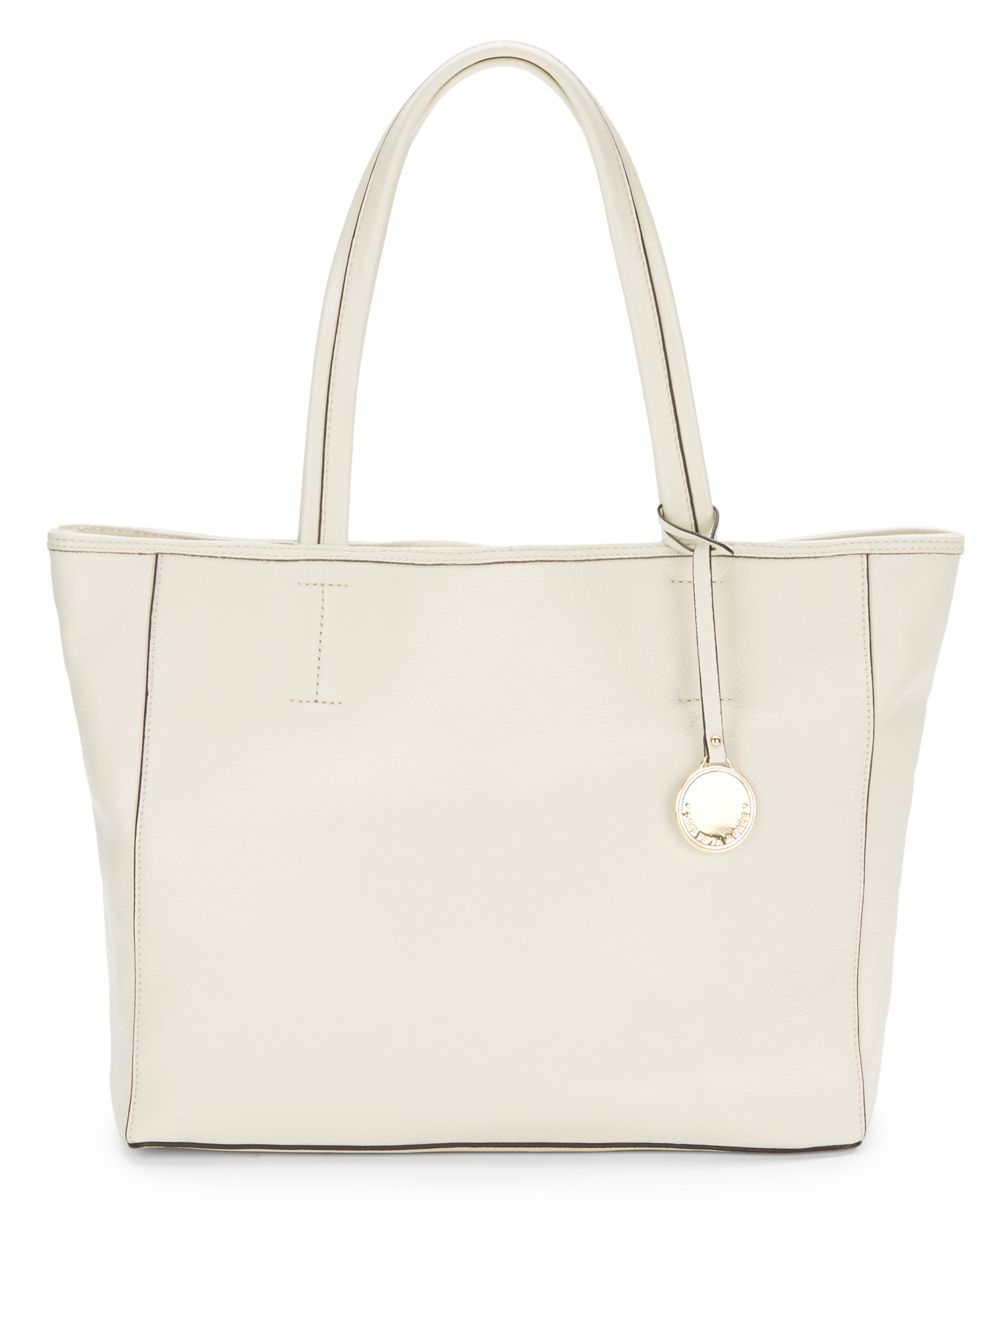 Handbags At Saks Fifth Avenue | semashow.com